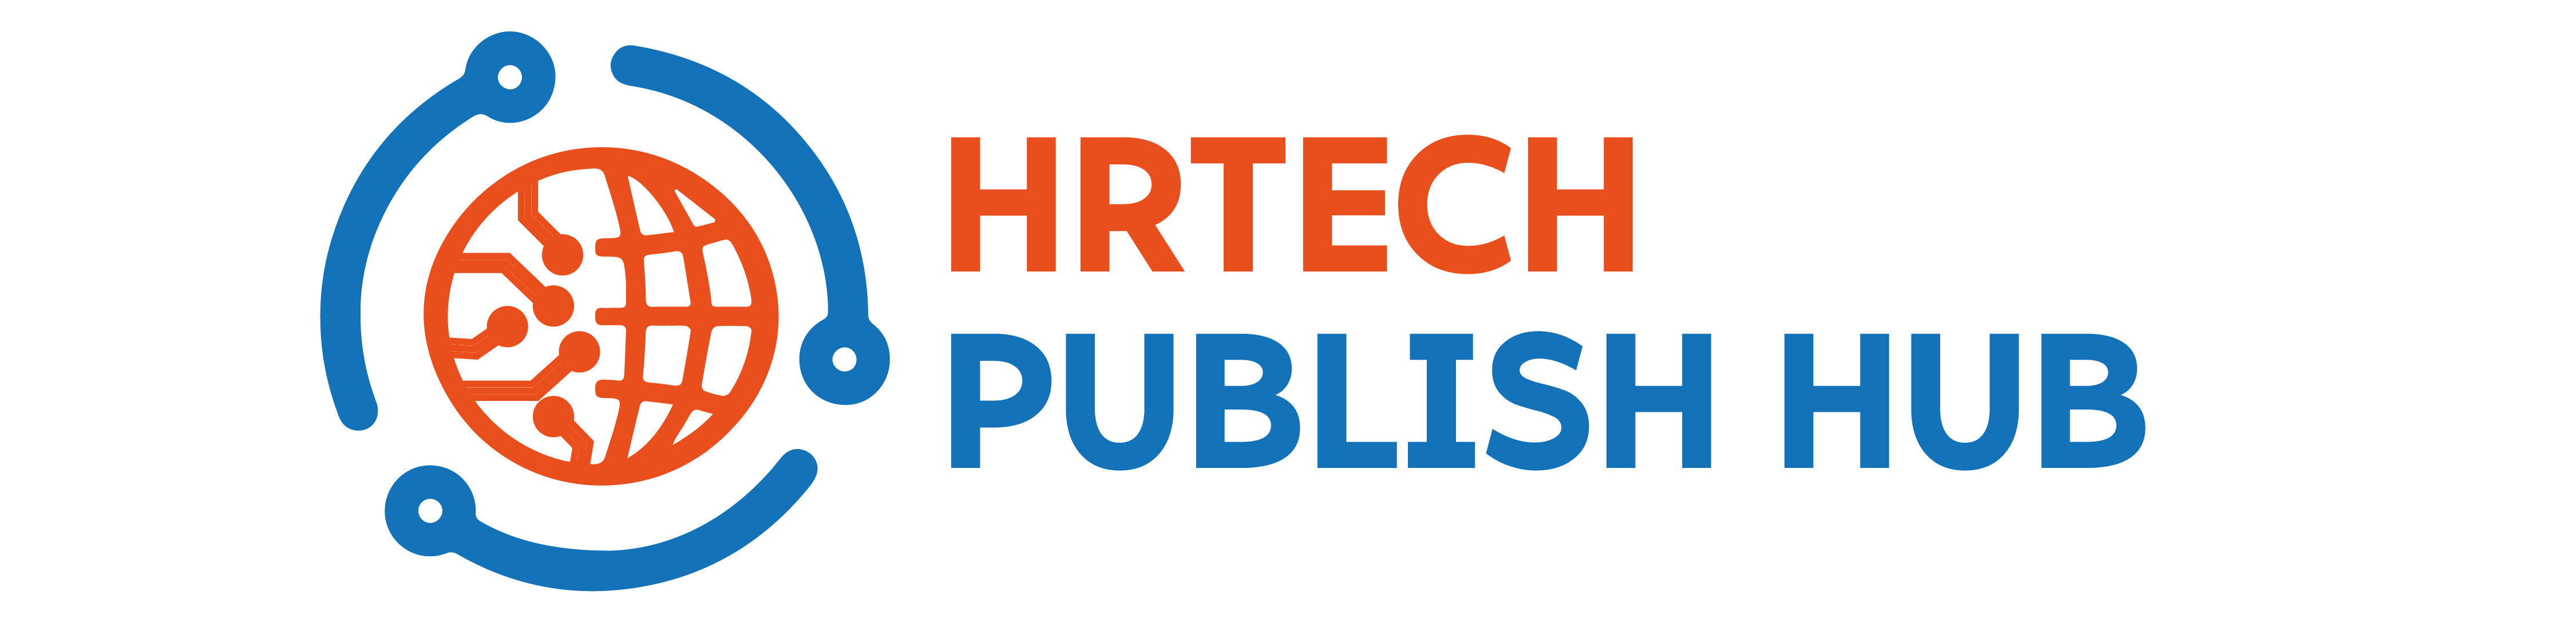 HR Tech Publish Hub